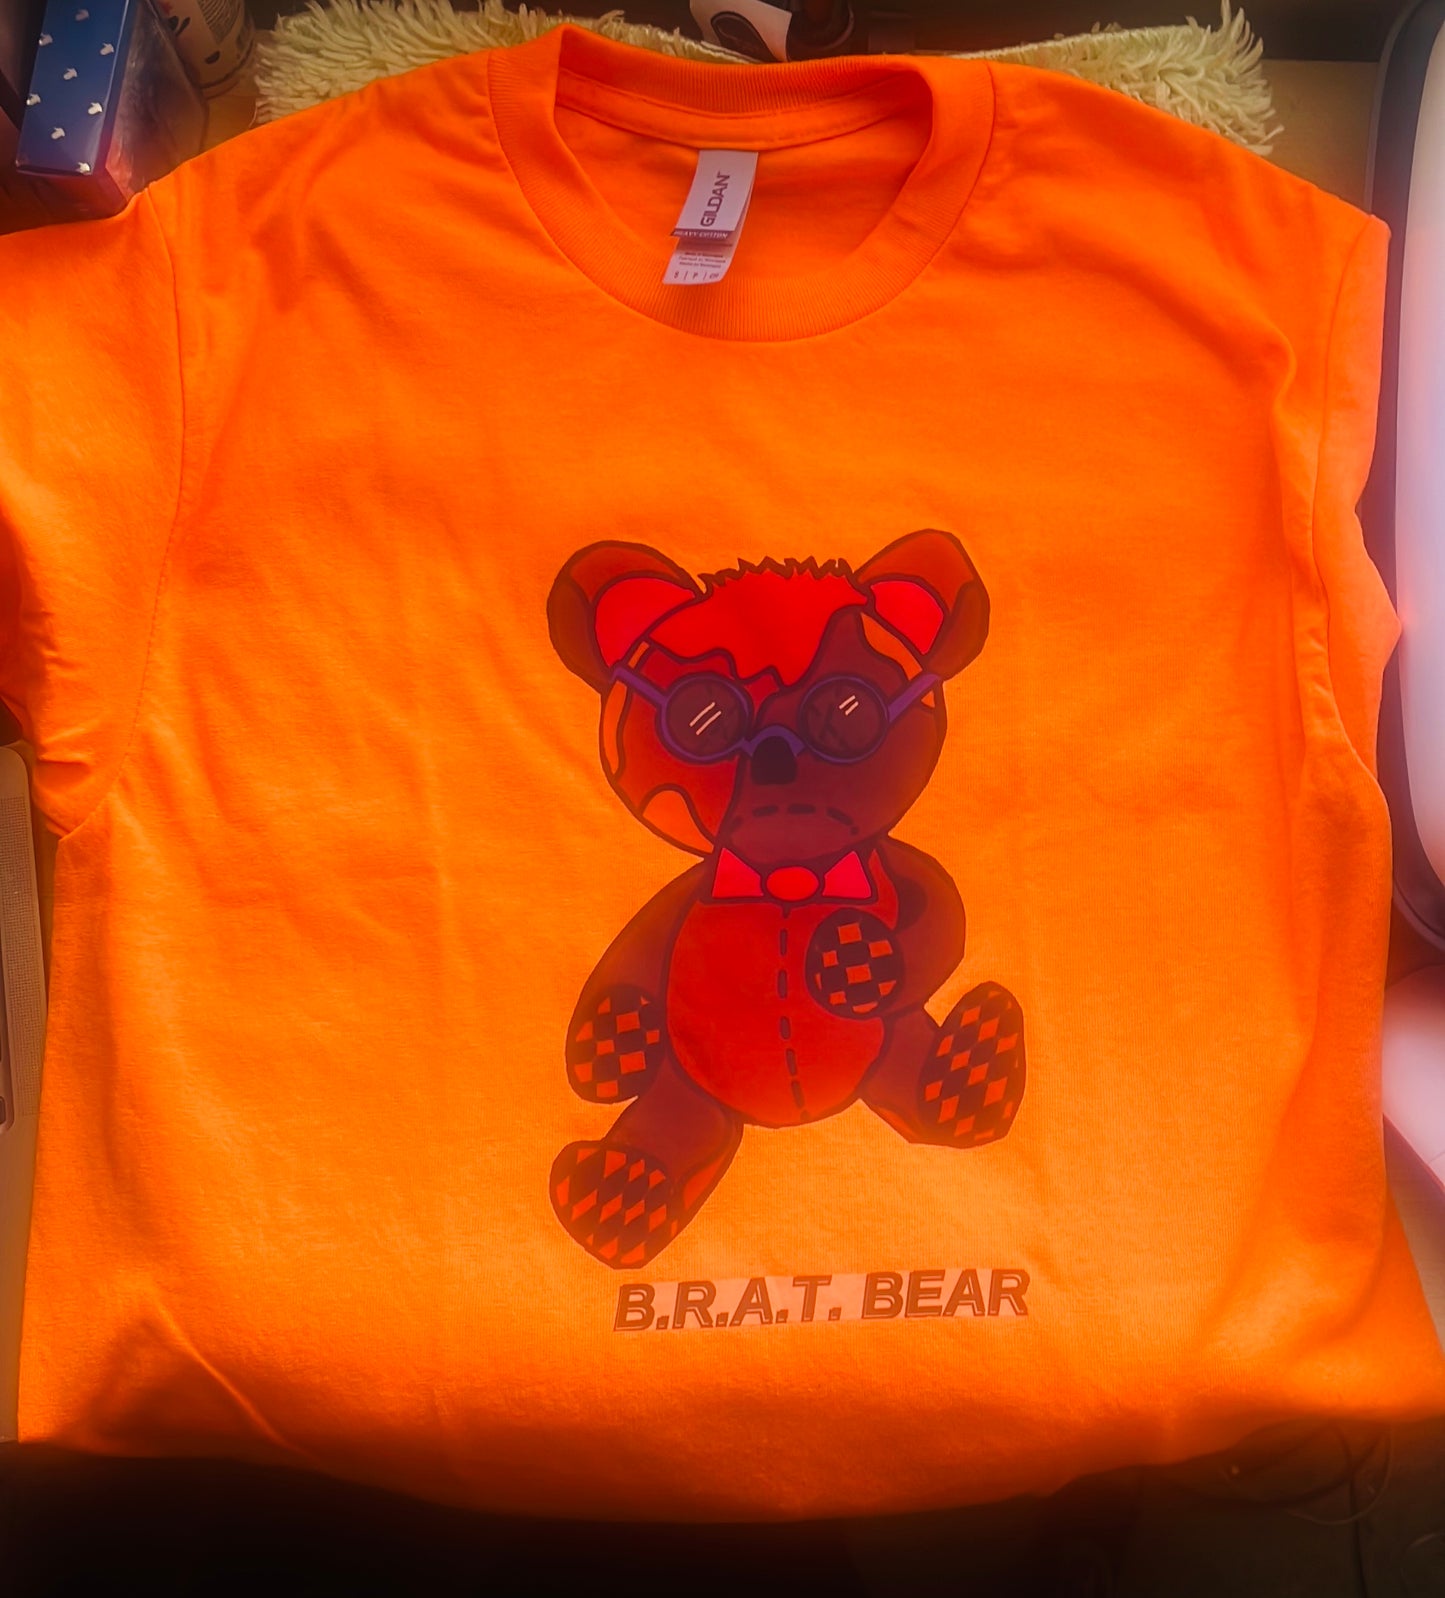 Brainy B.R.A.T. Bear Tshirt